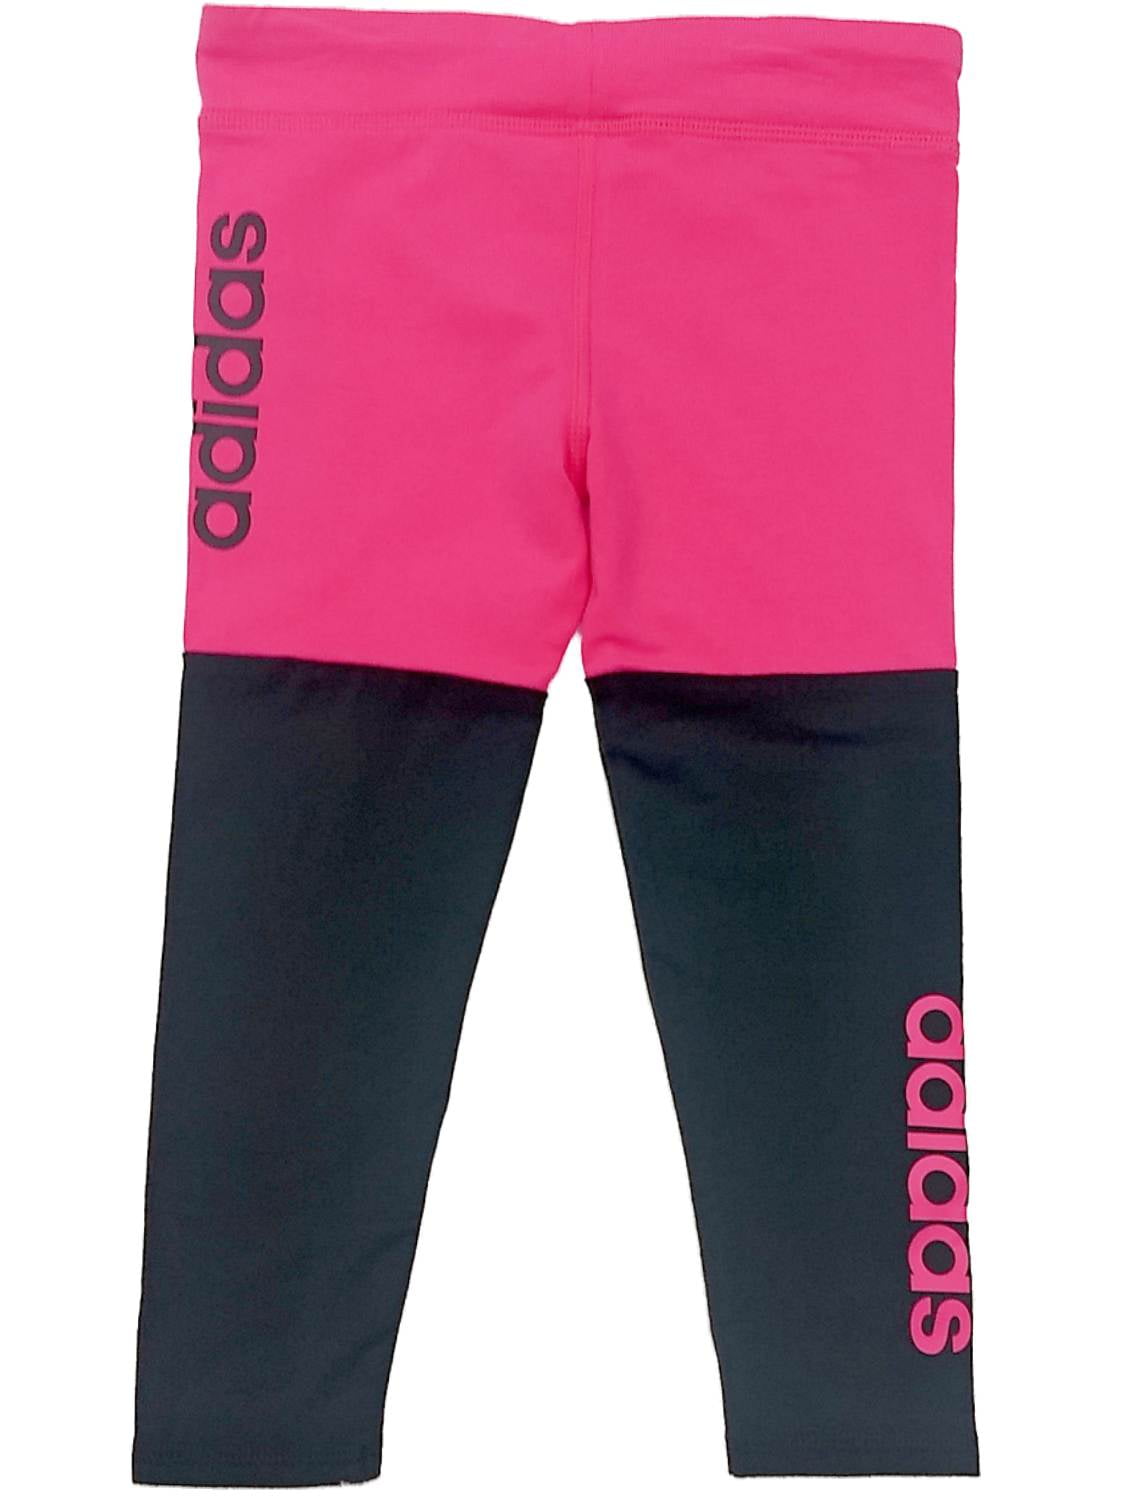 pink and black adidas pants